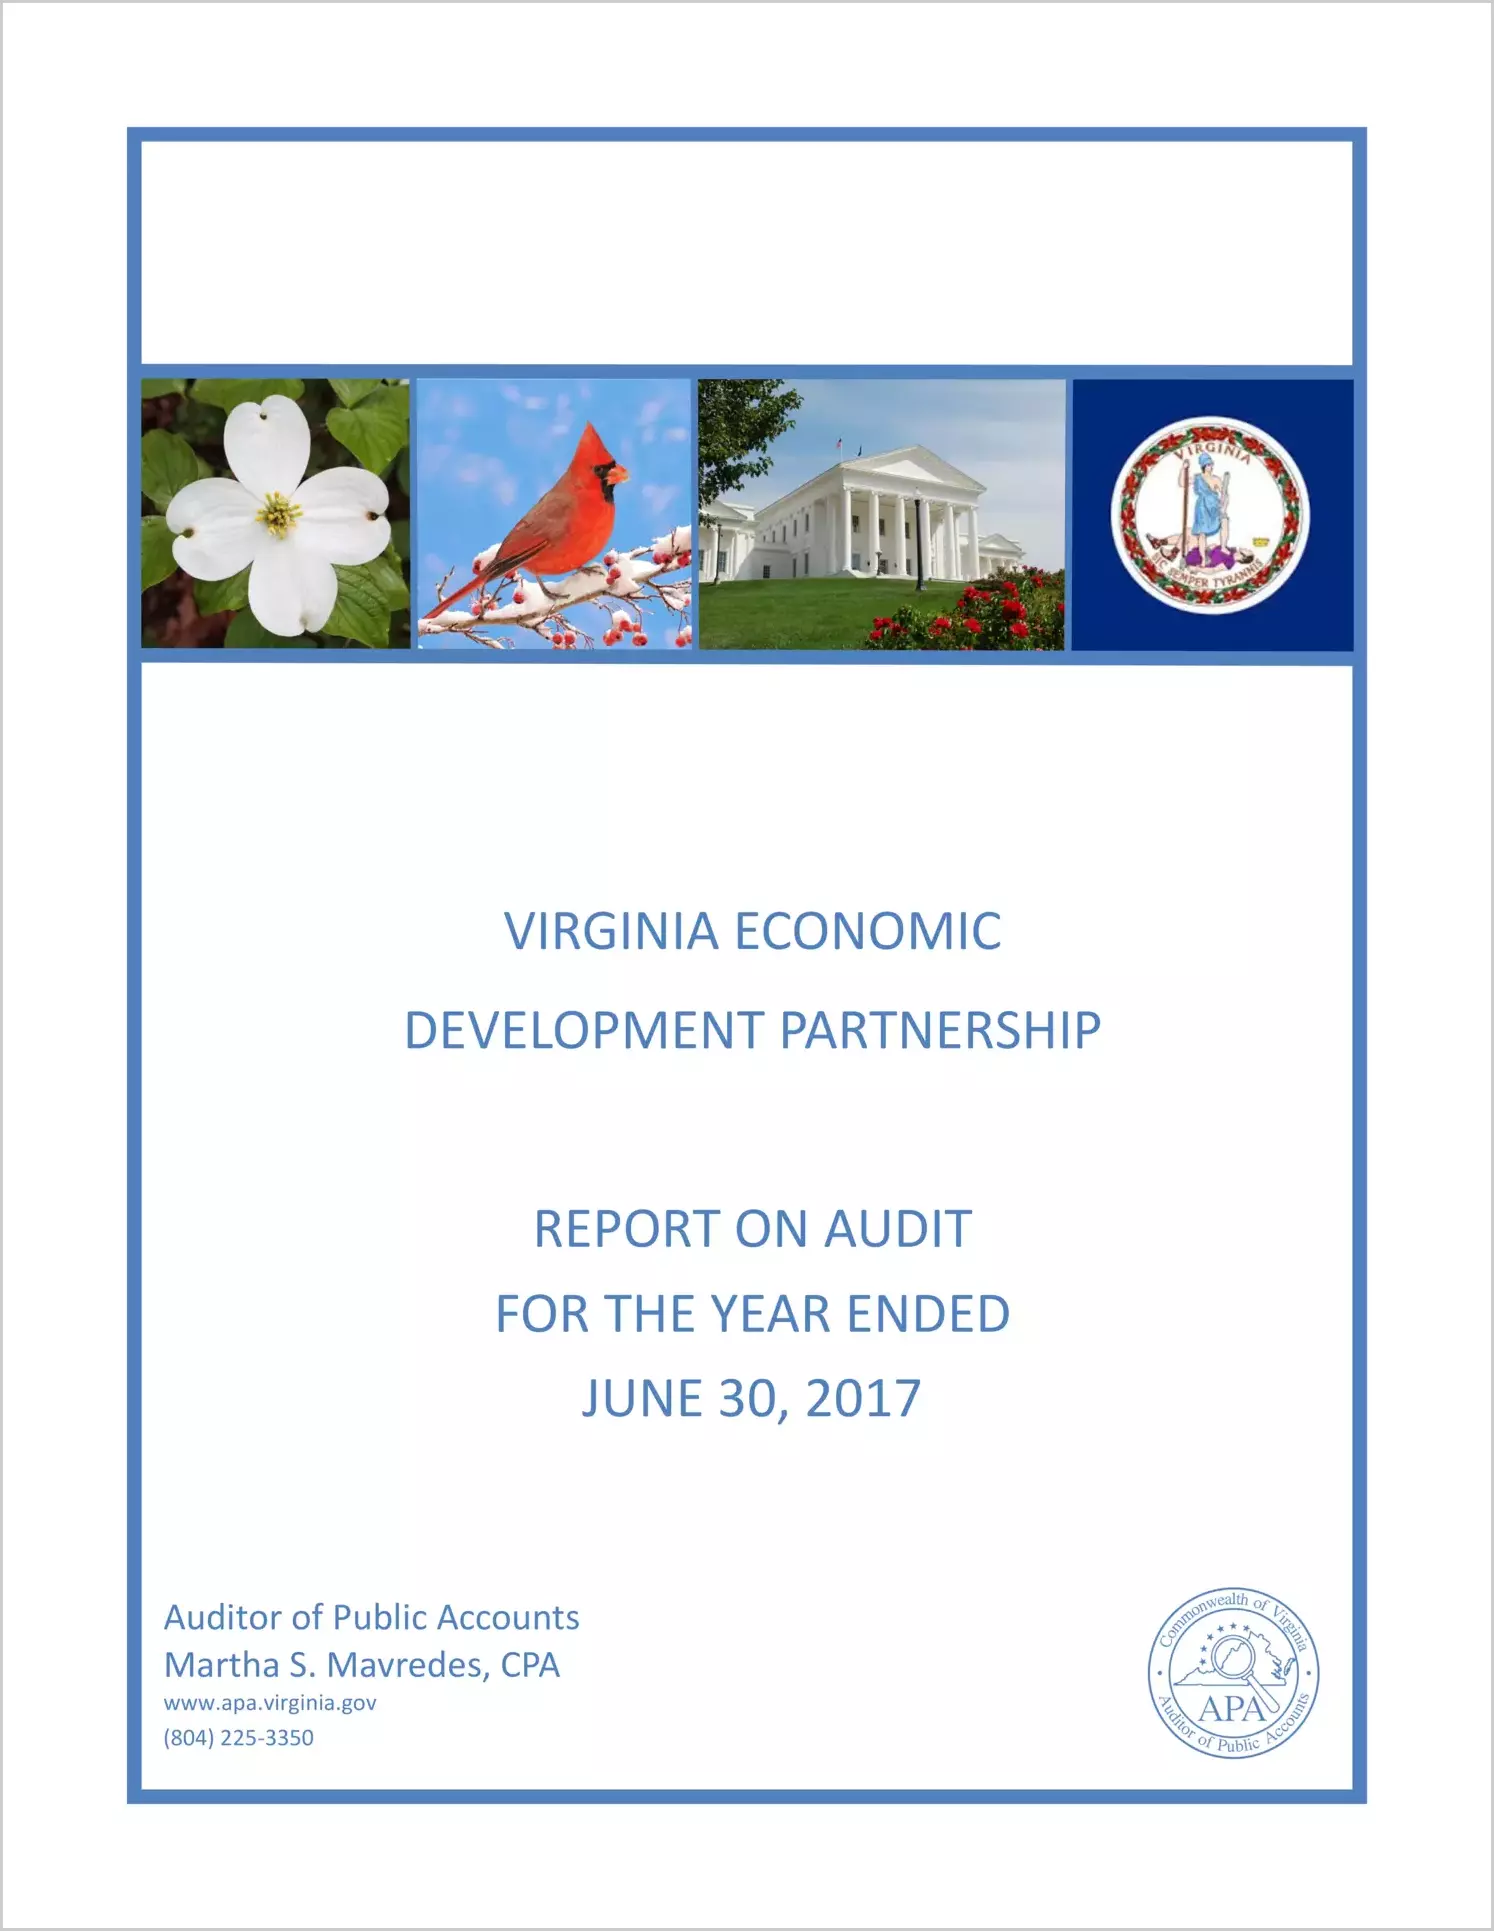 Virginia Economic Development Partnership for the year ended June 30, 2017